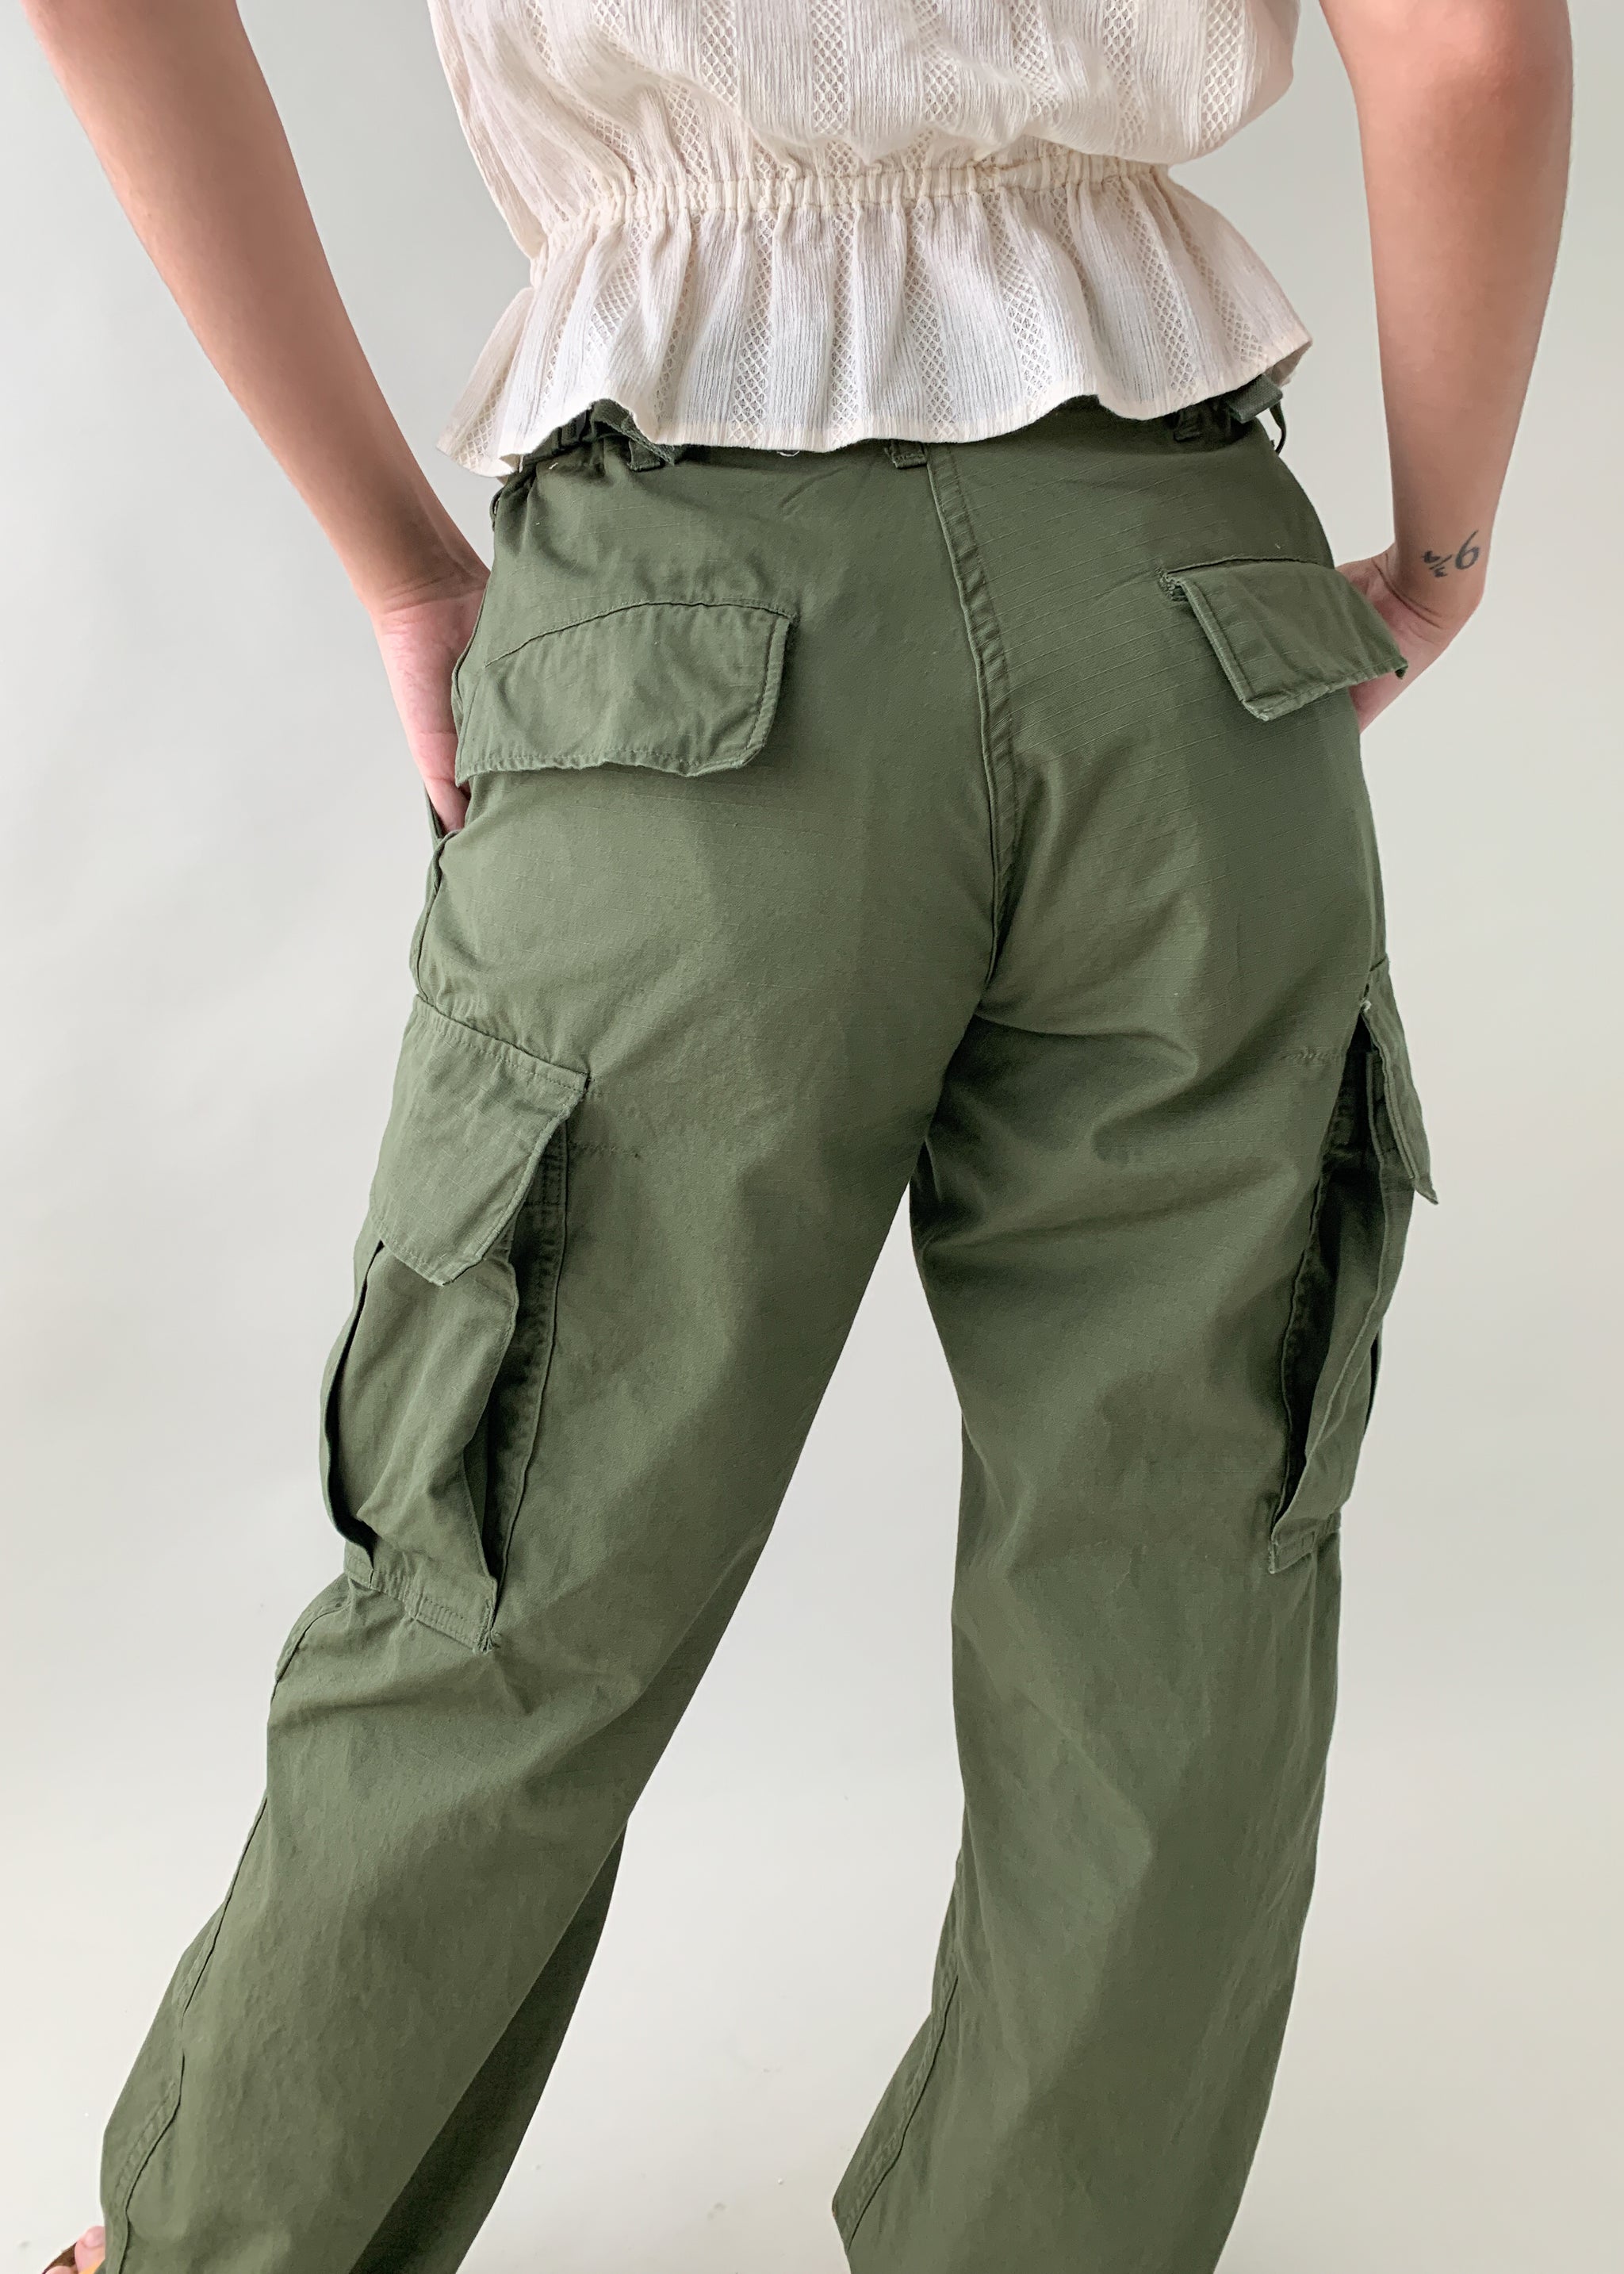 Professional Mens Tactical Pants, Military Pants, and Mens Work Pants